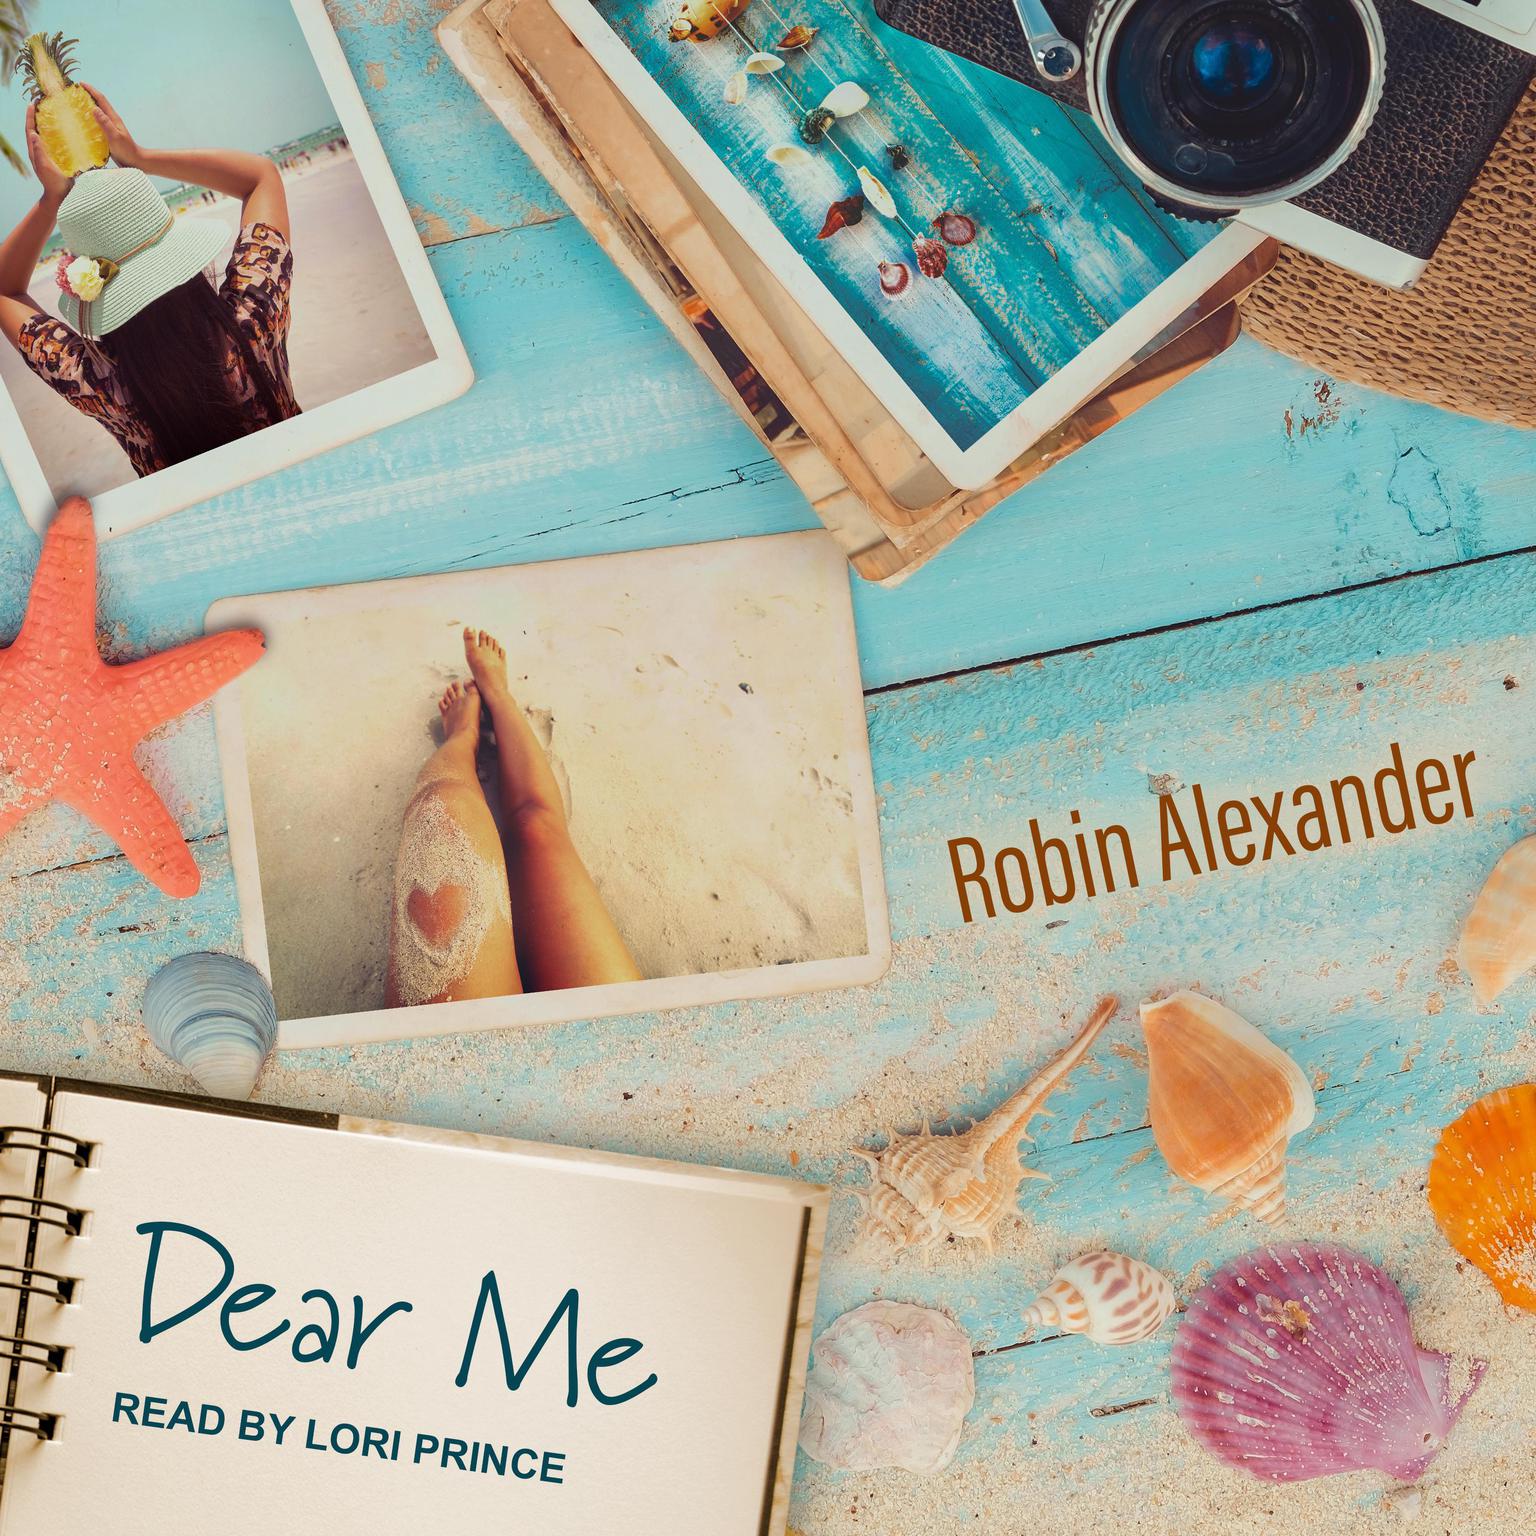 Robin Alexander, Lori Prince: Dear Me (AudiobookFormat, 2020, Tantor Audio)